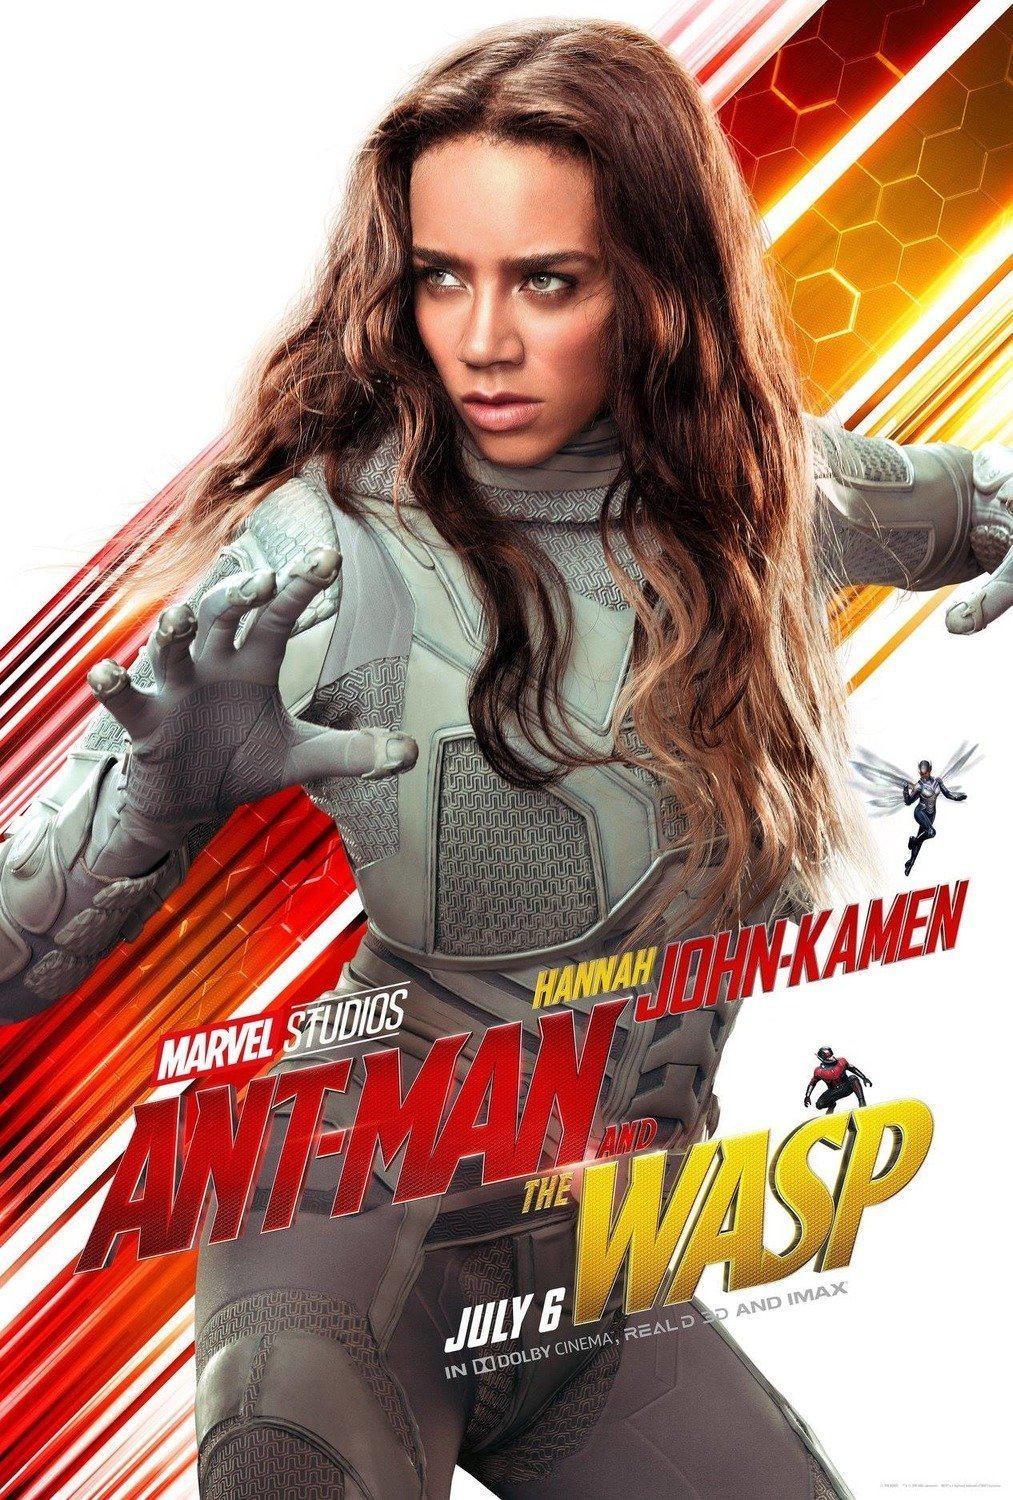 Poster du film Ant-Man et la Guêpe avec Ghost (Hannah John-Kamen)